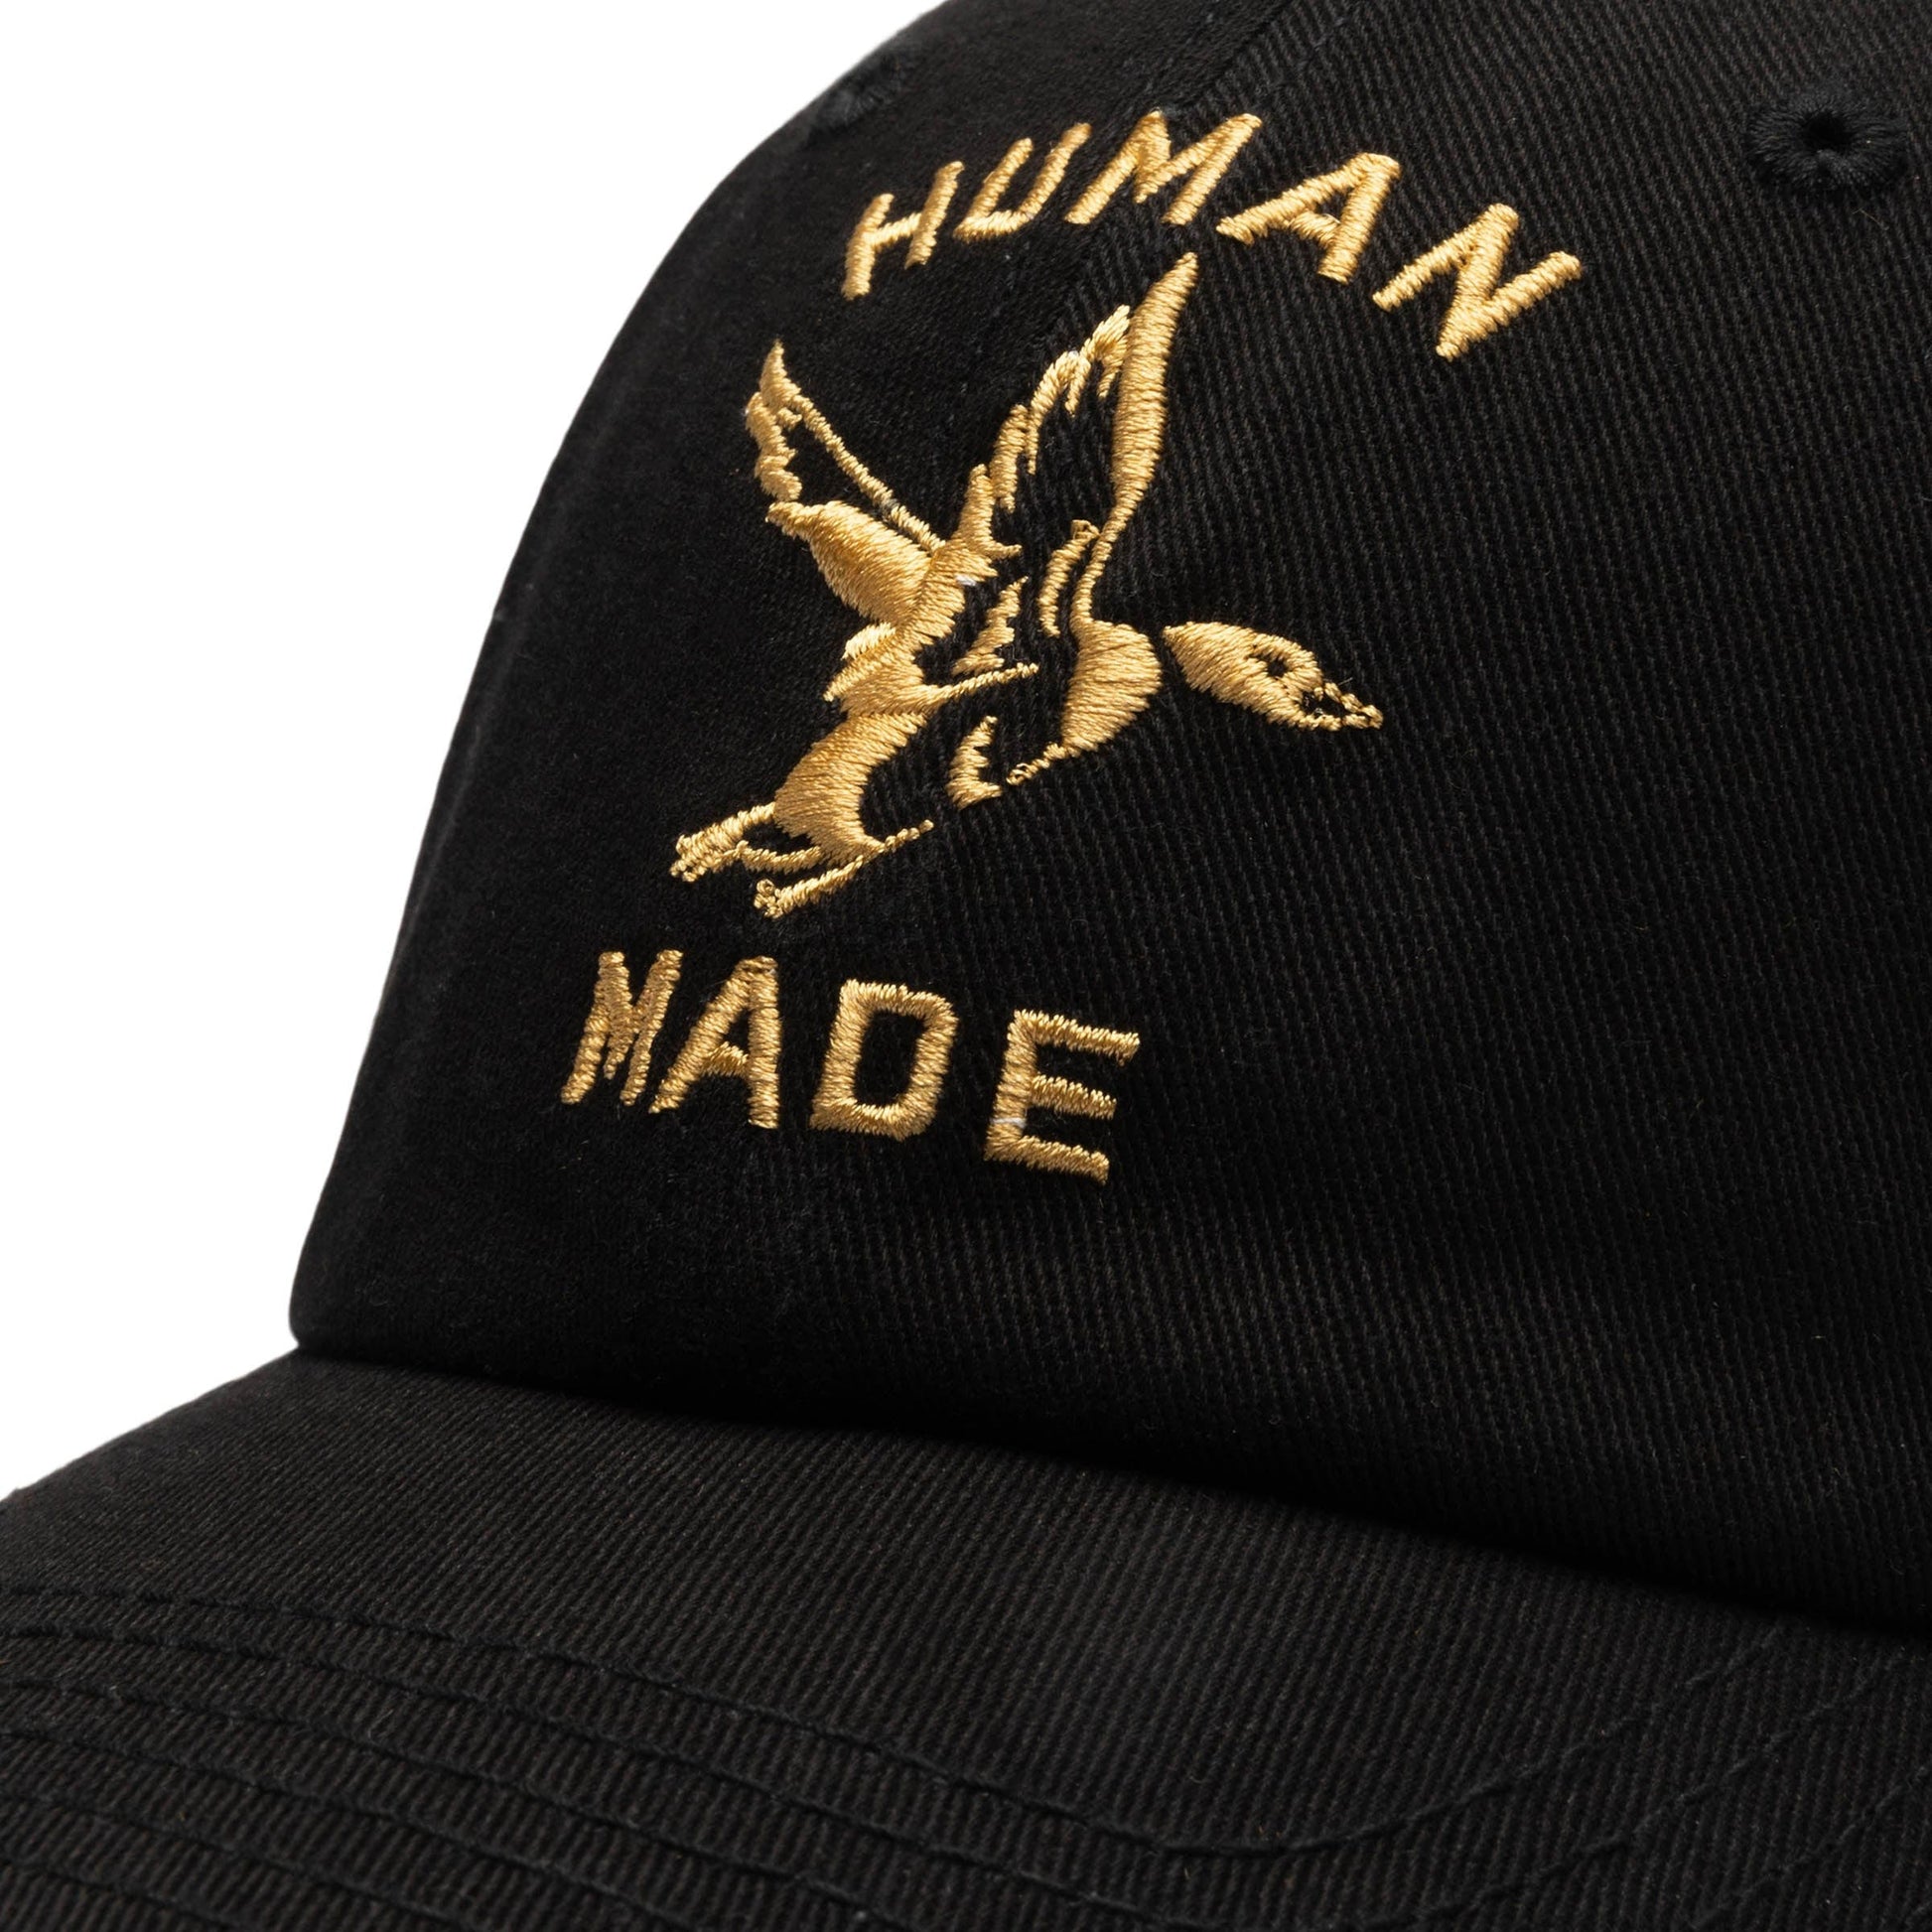 Human Made Headwear BLACK / O/S 6 PANEL CAP #5